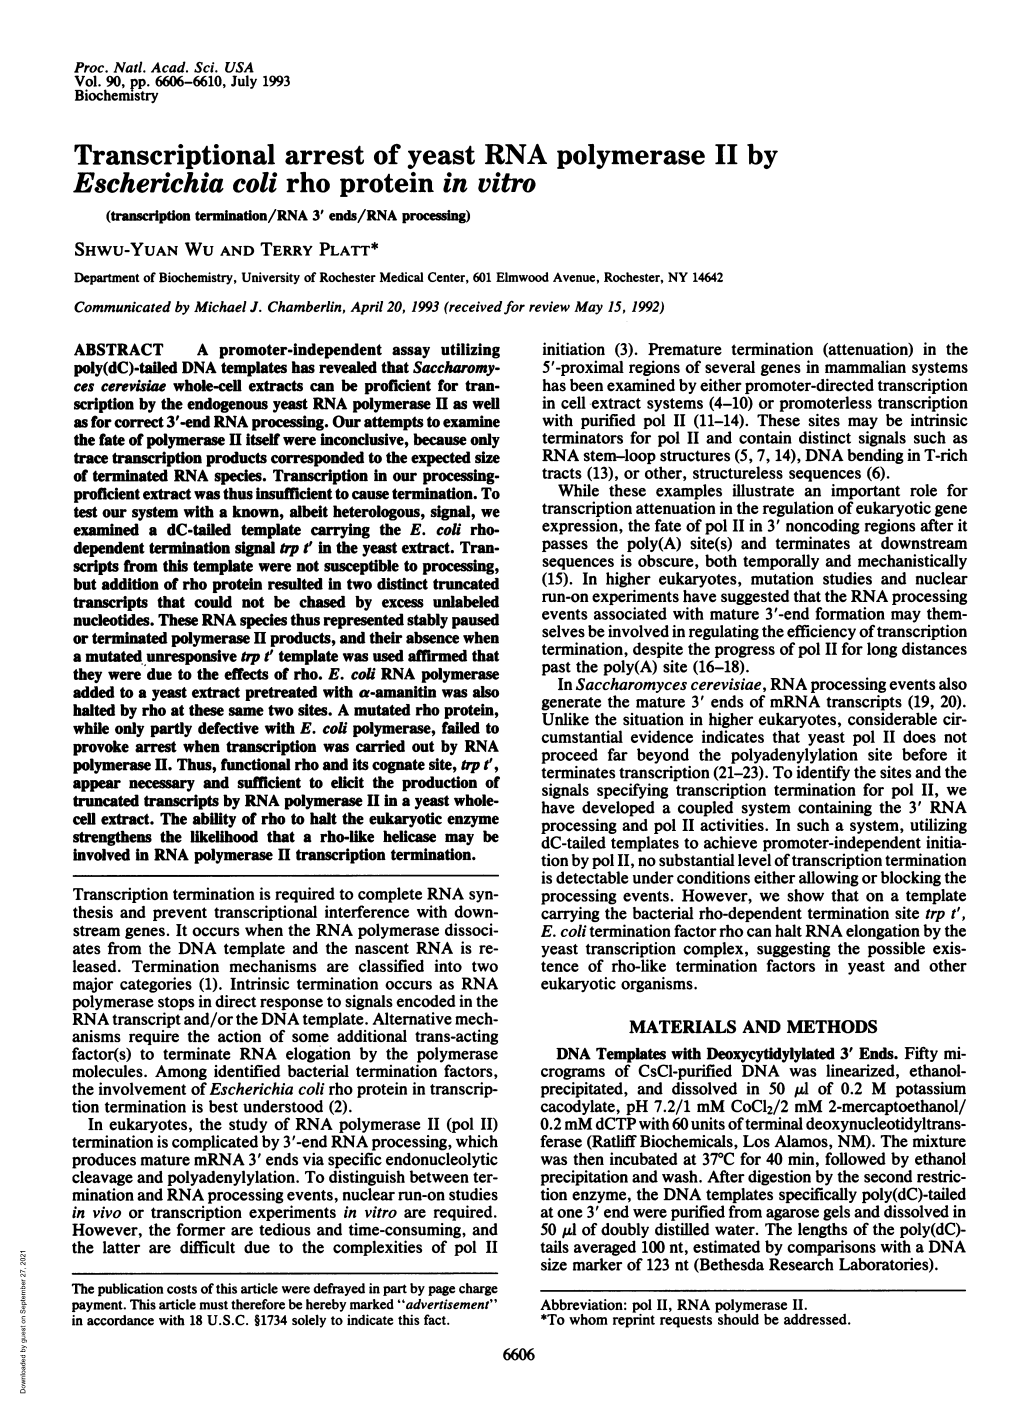 Transcriptional Arrest of Yeast RNA Polymerase II by Escherichia Coli